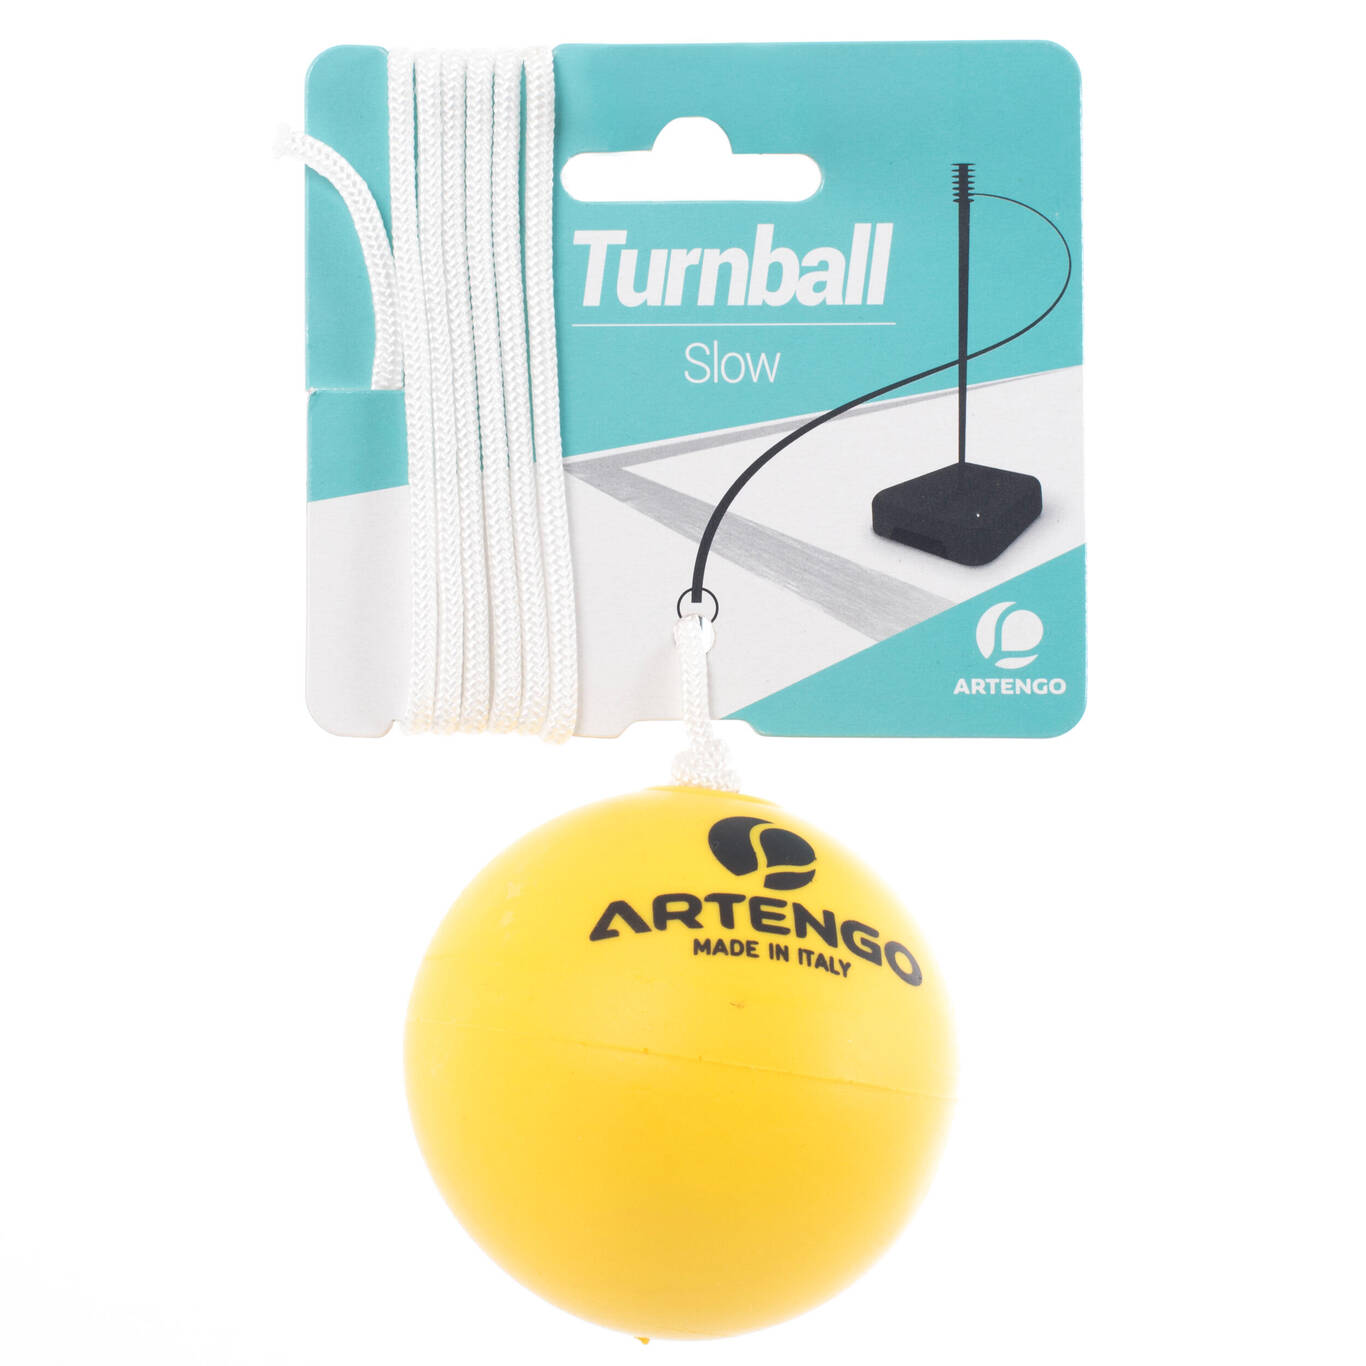 Turnball Slow Ball